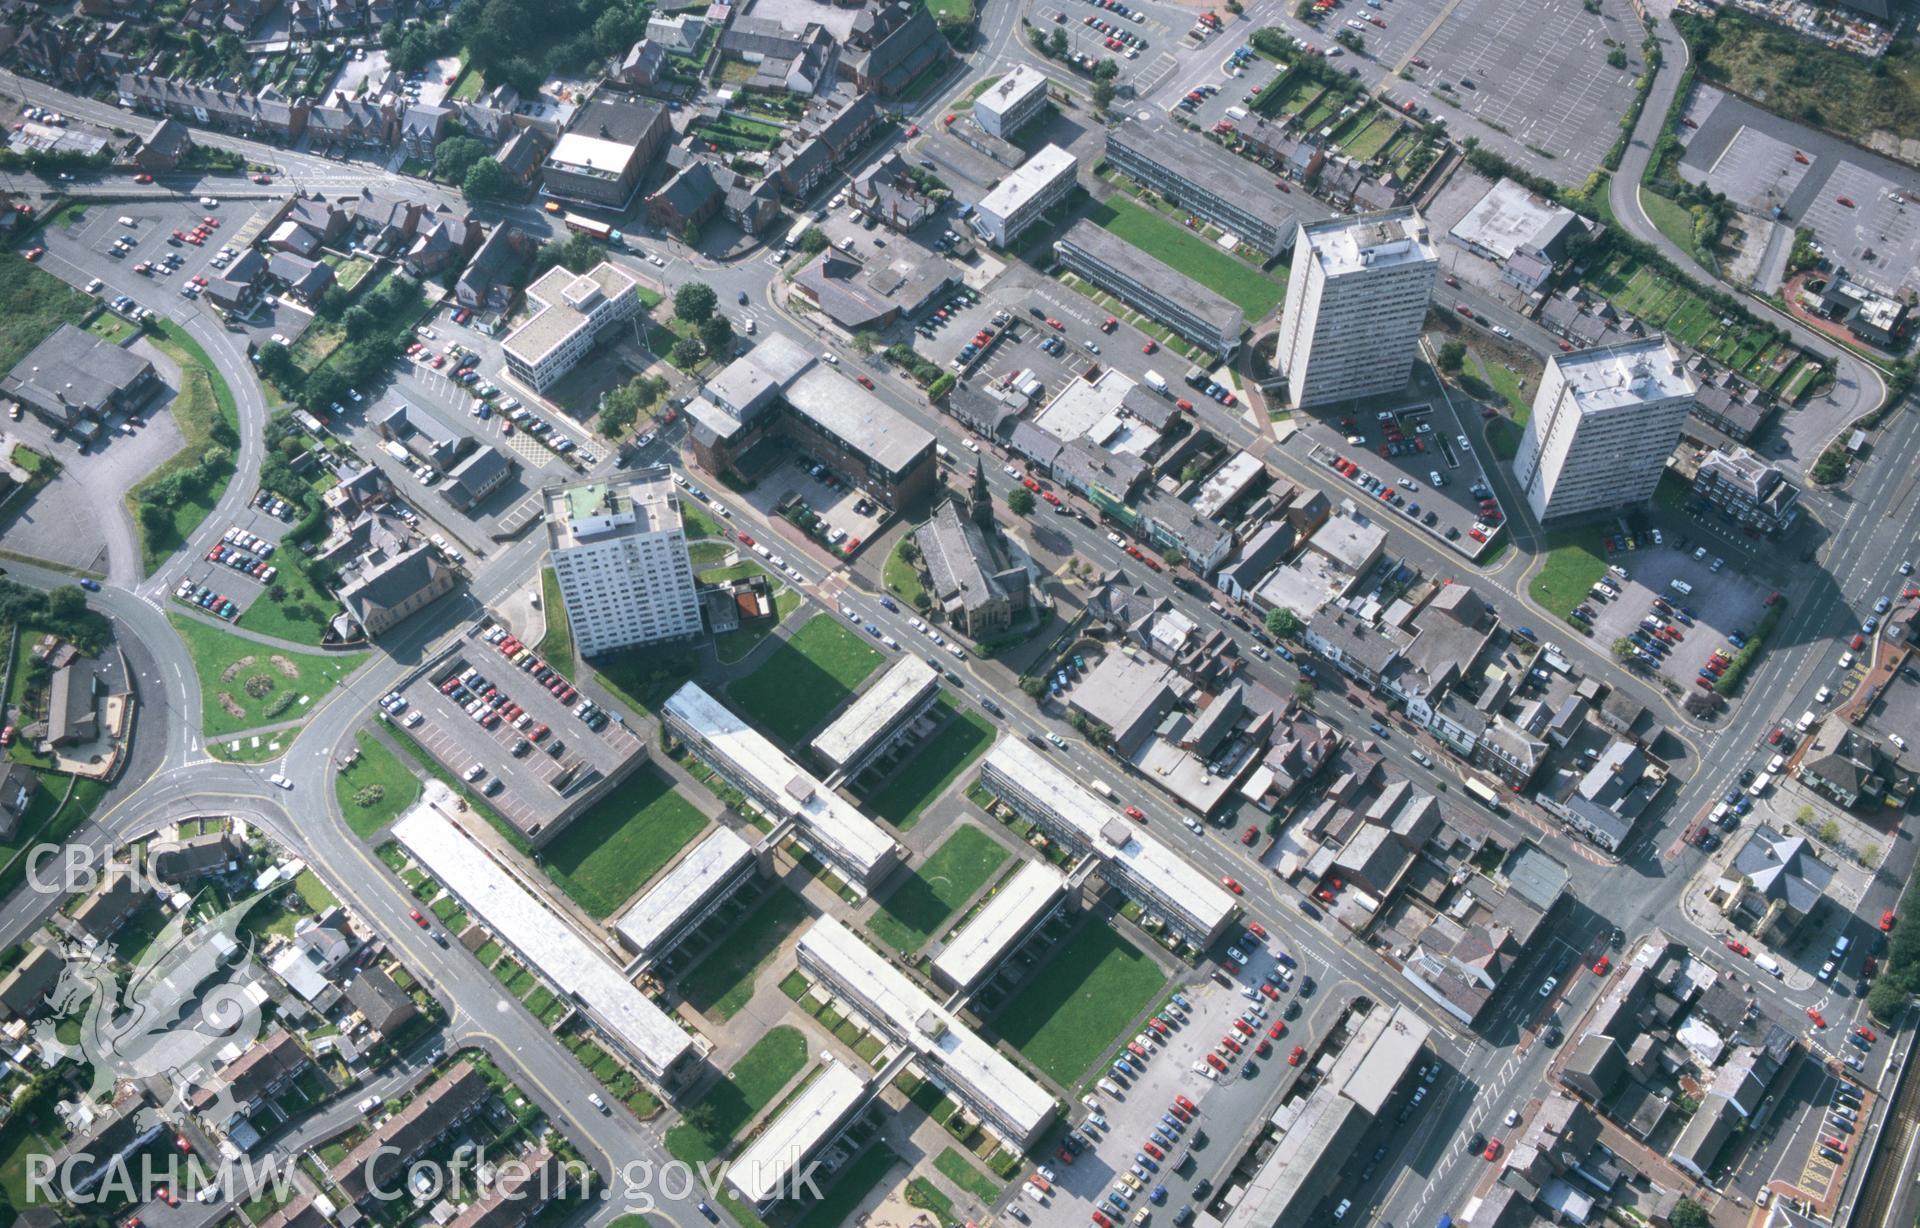 Slide of RCAHMW colour oblique aerial photograph of Flint, taken by T.G. Driver, 30/8/2000.